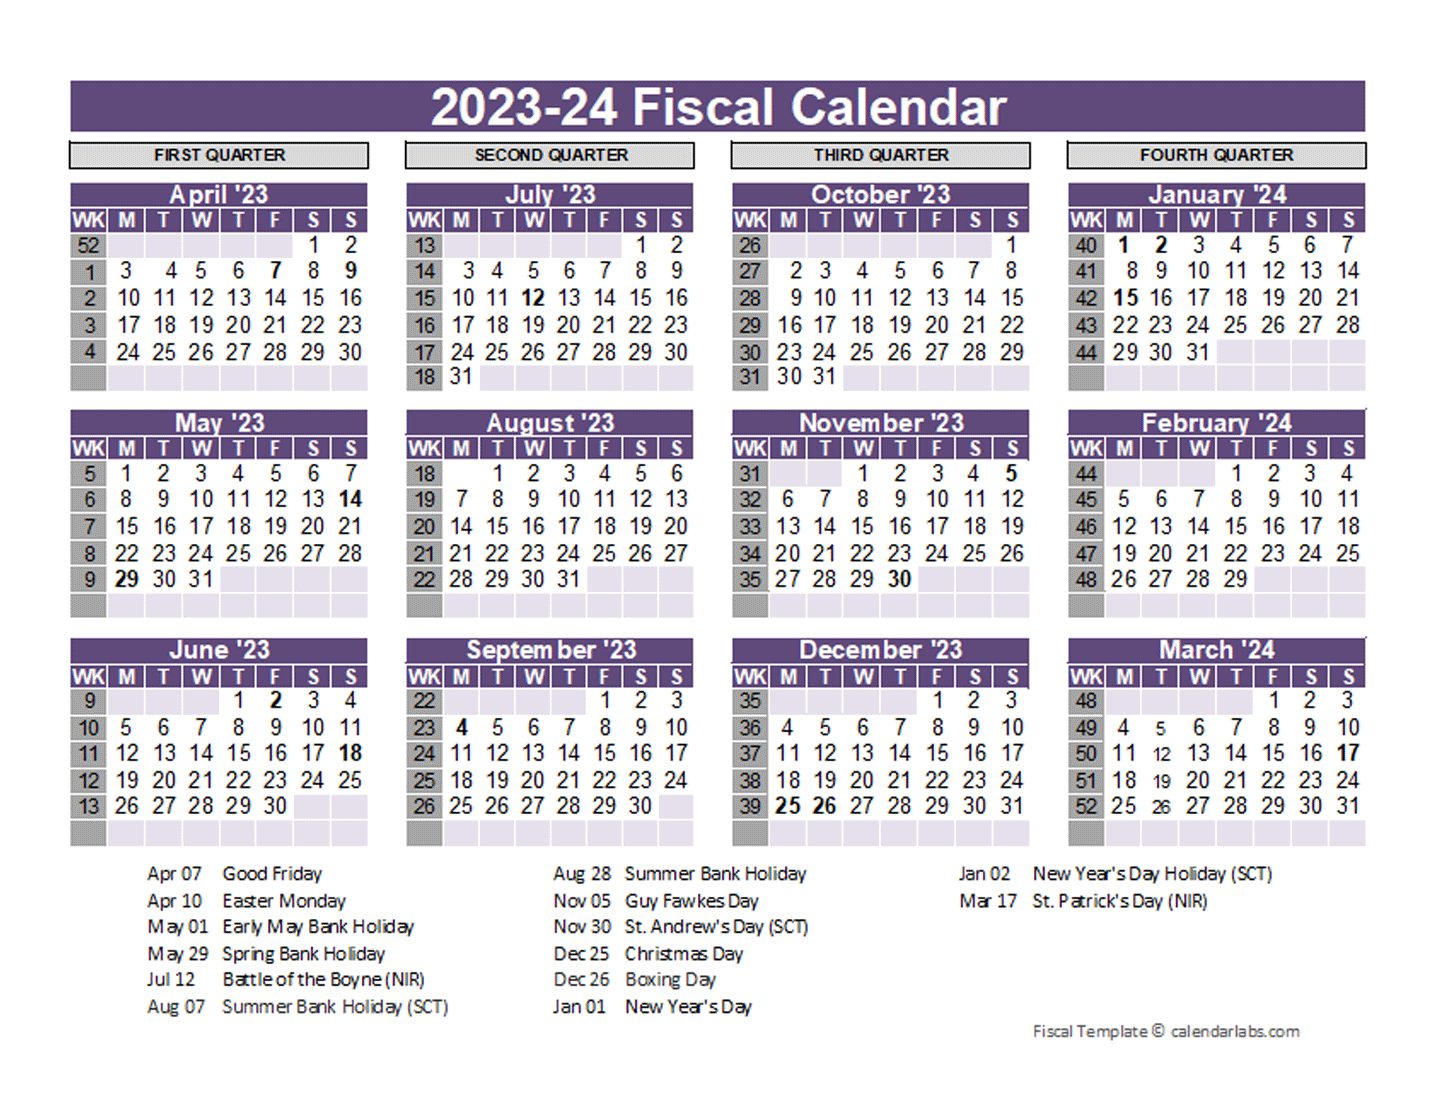 Tax Year 2024 Dates Roda Virgie